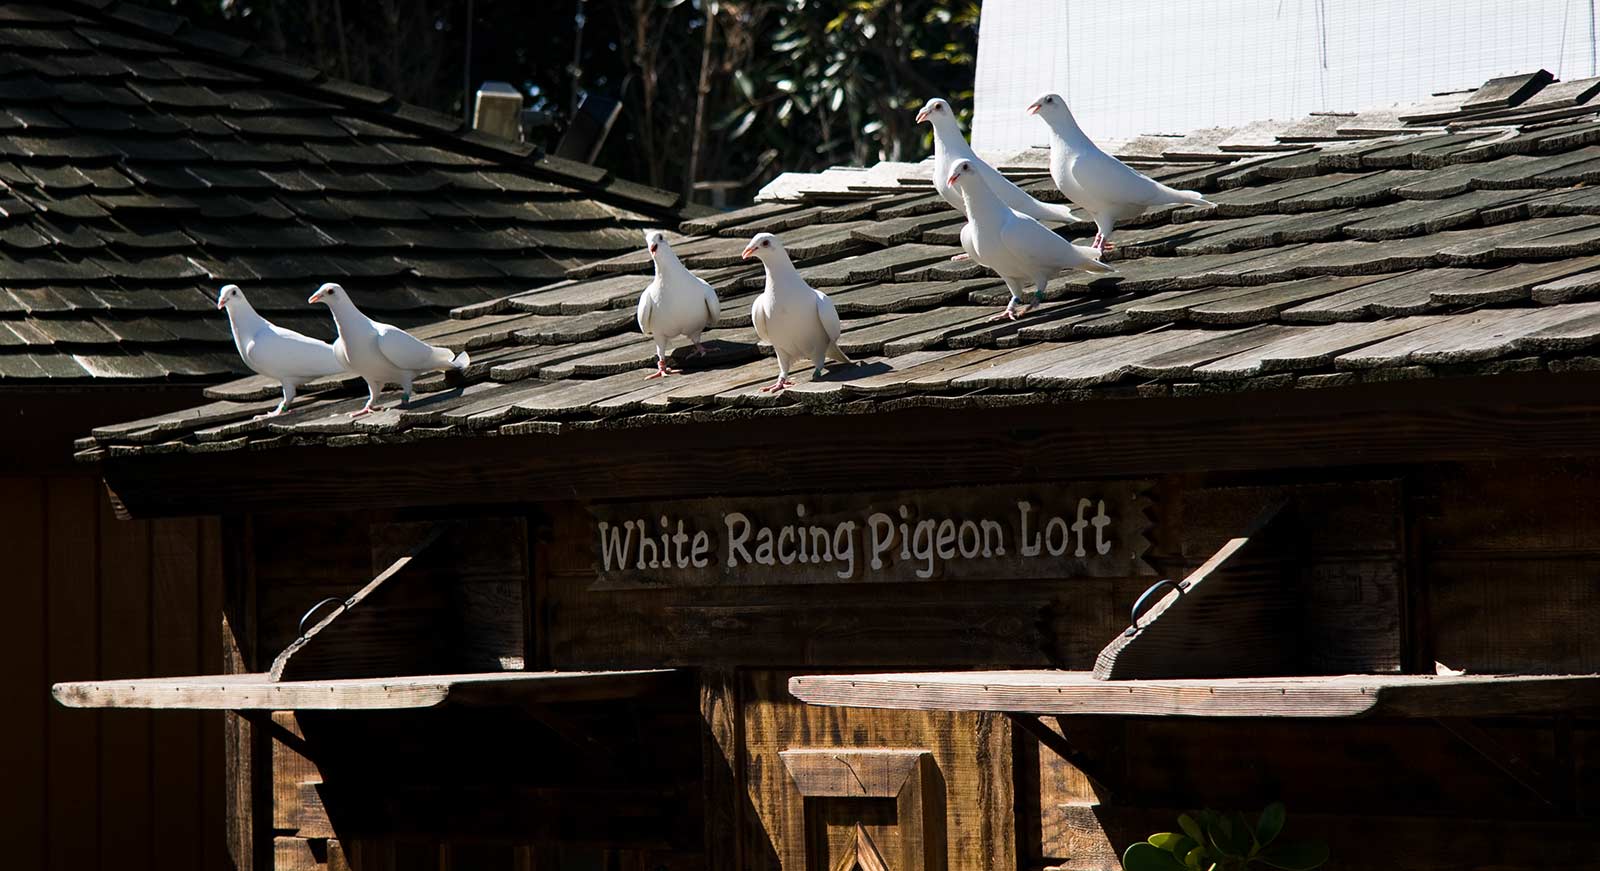 racing pigeons